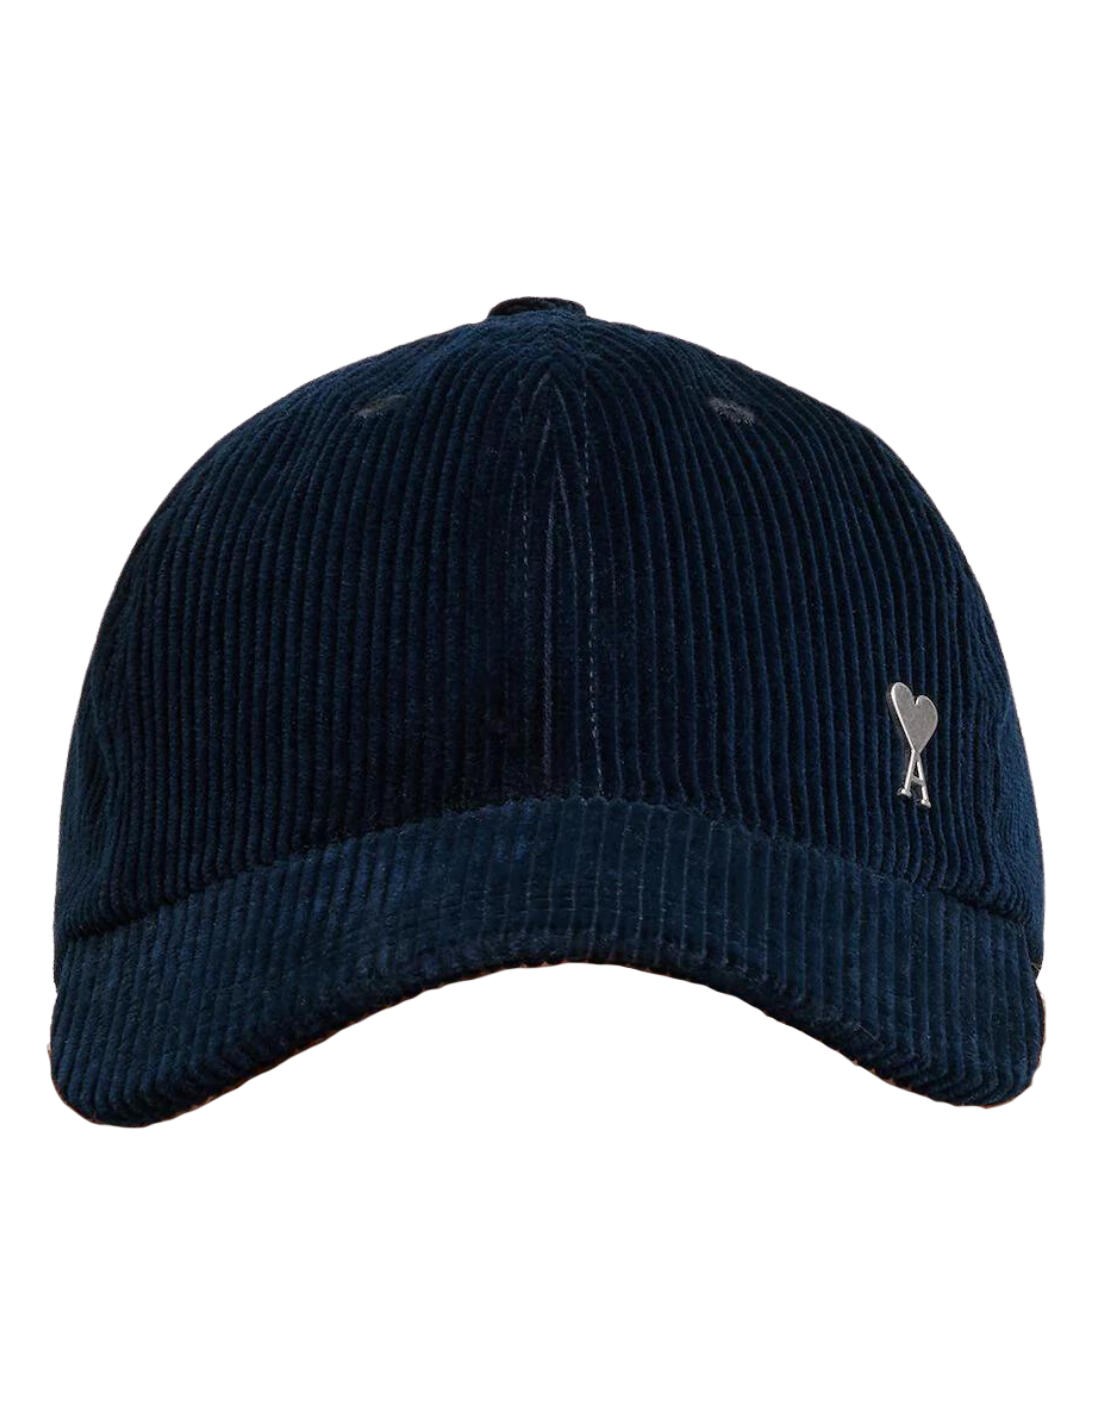 Corduroy velvet cap with metal logo - Navy